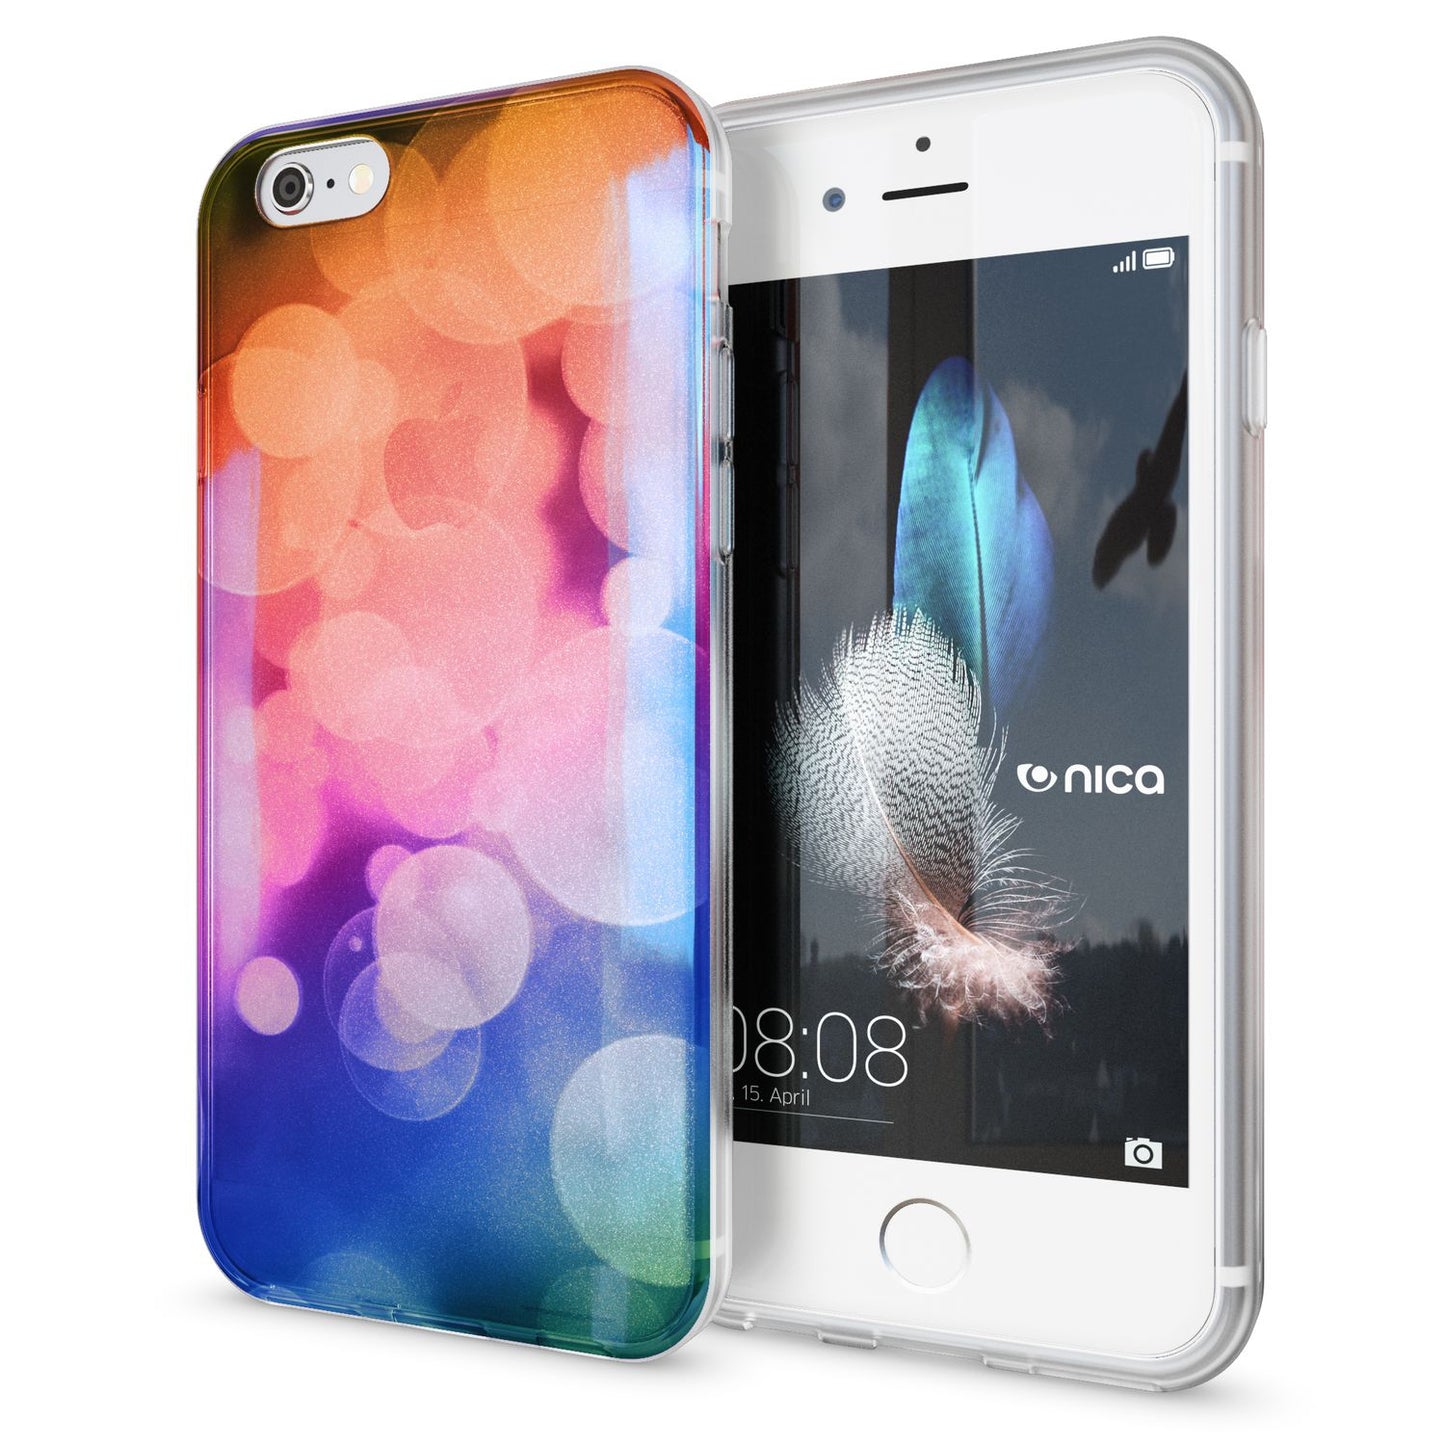 Apple iPhone 6 6S Handy Hülle 3D von NALIA Glitzer Silikon Case Cover Schutzhülle